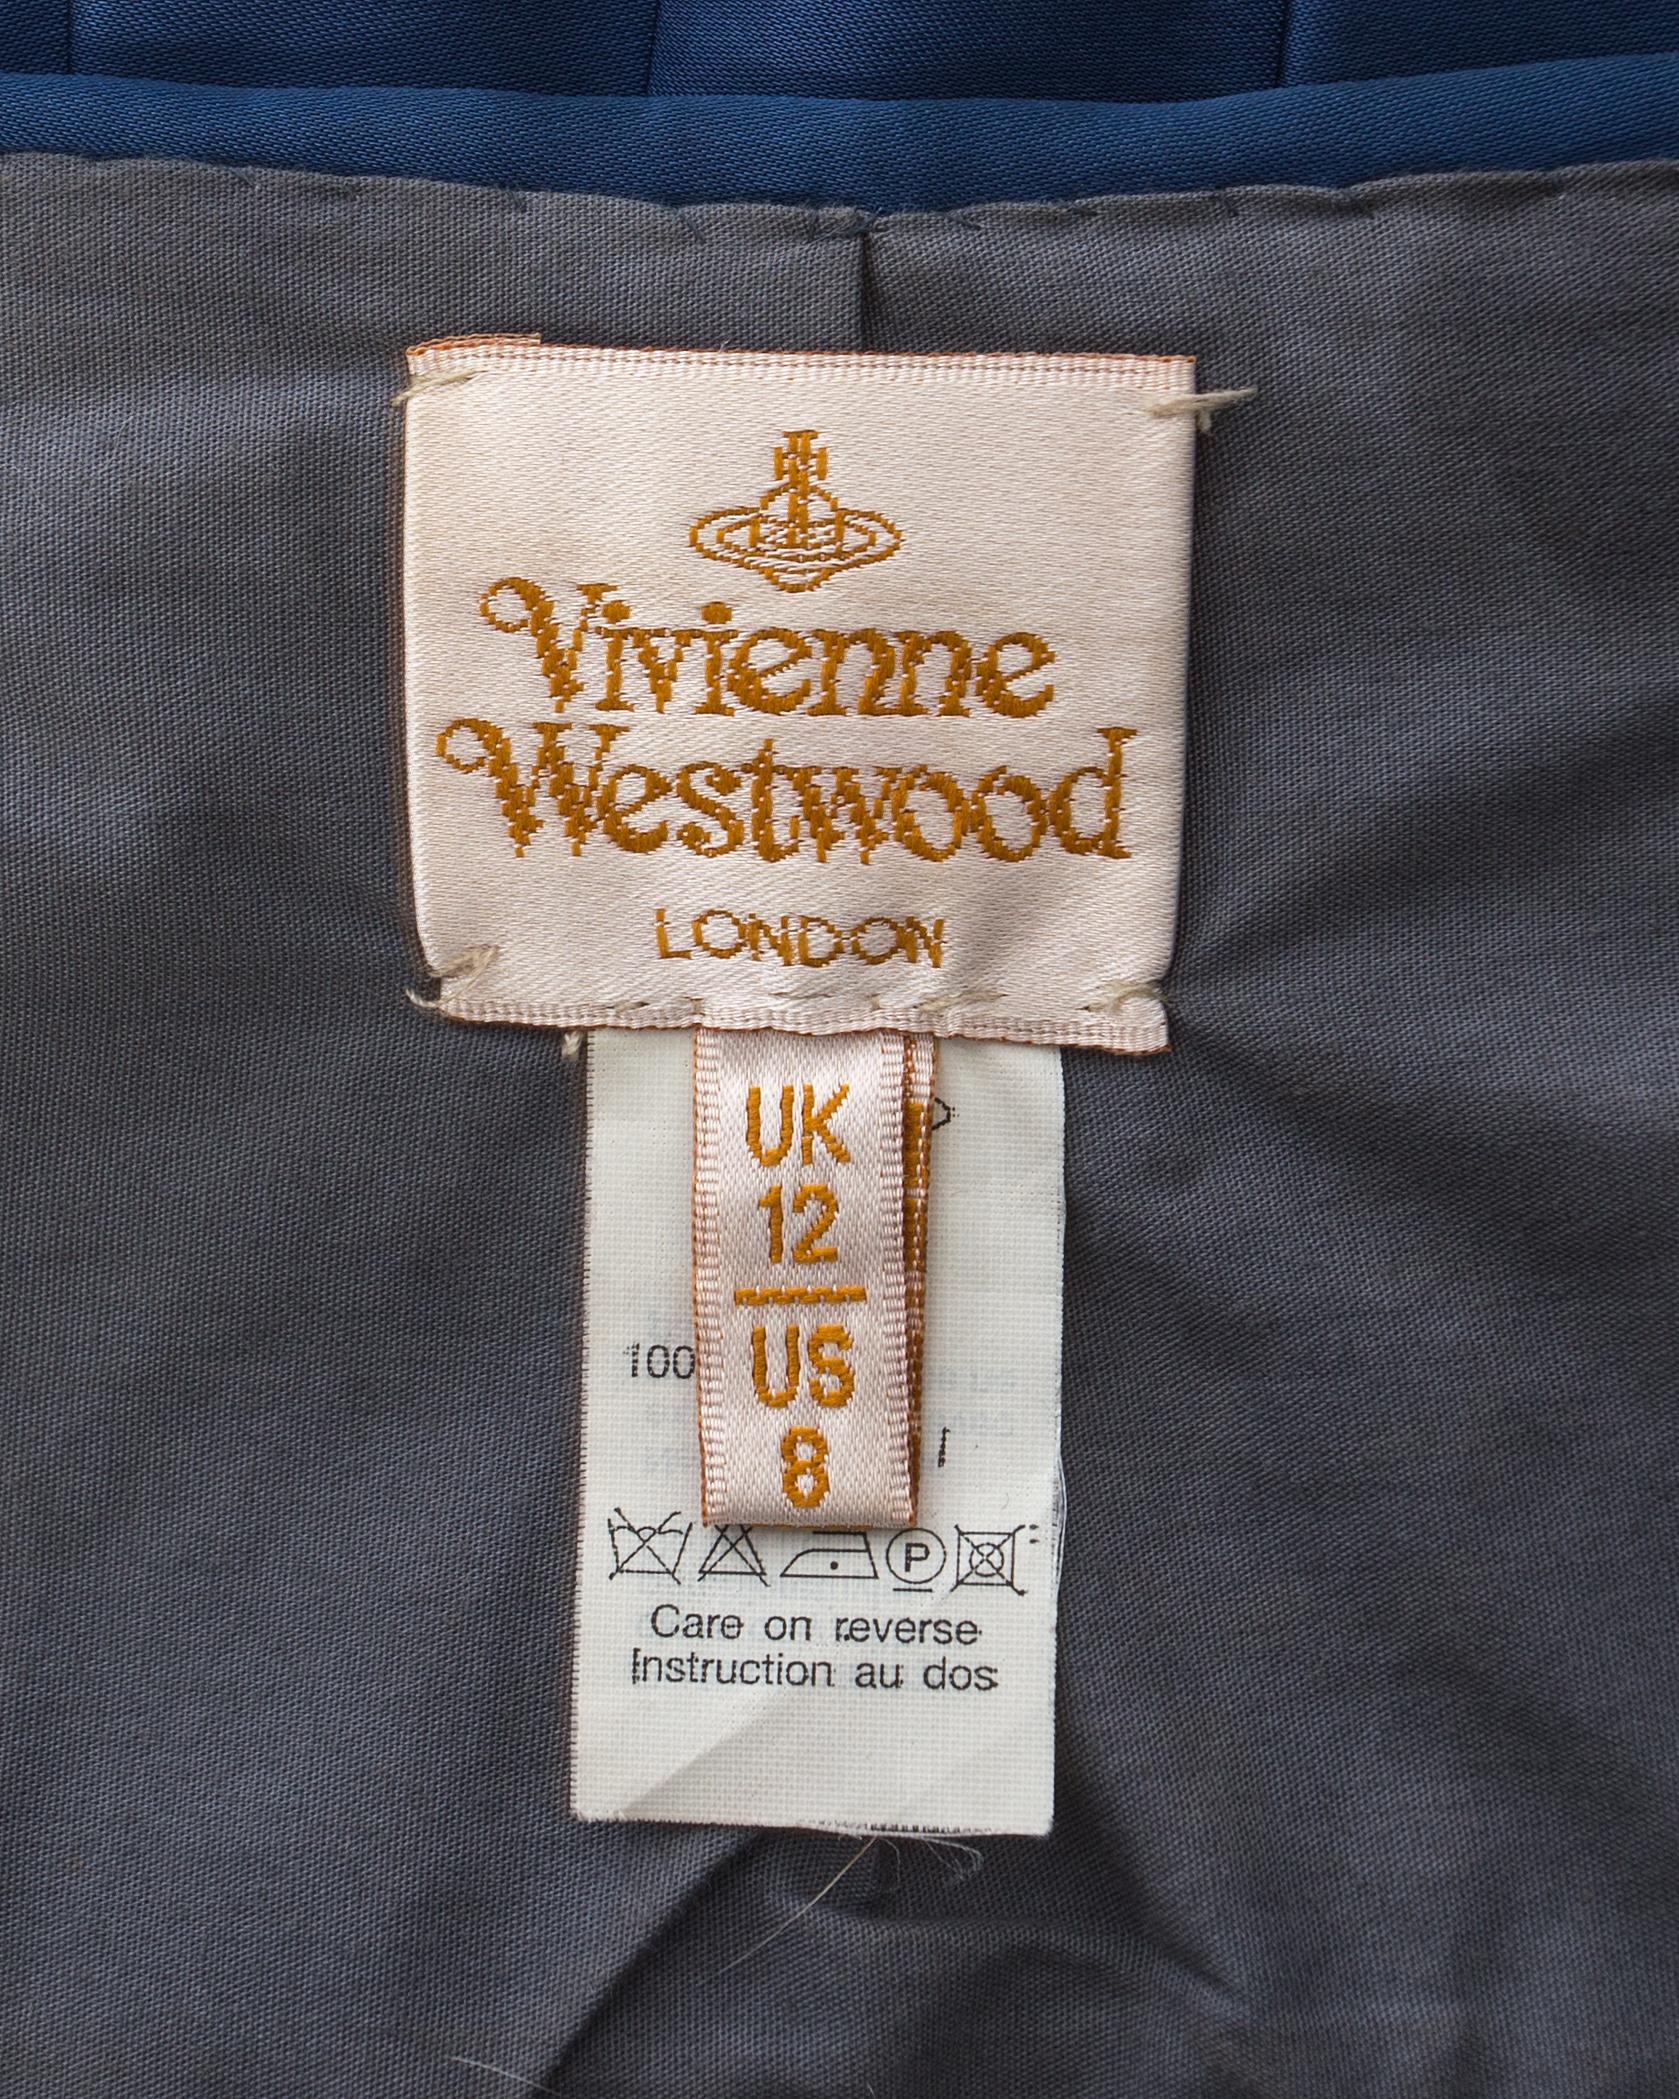 Vivienne Westwood, blue satin pleated wrap mini skirt / kilt, AW 2003 ...